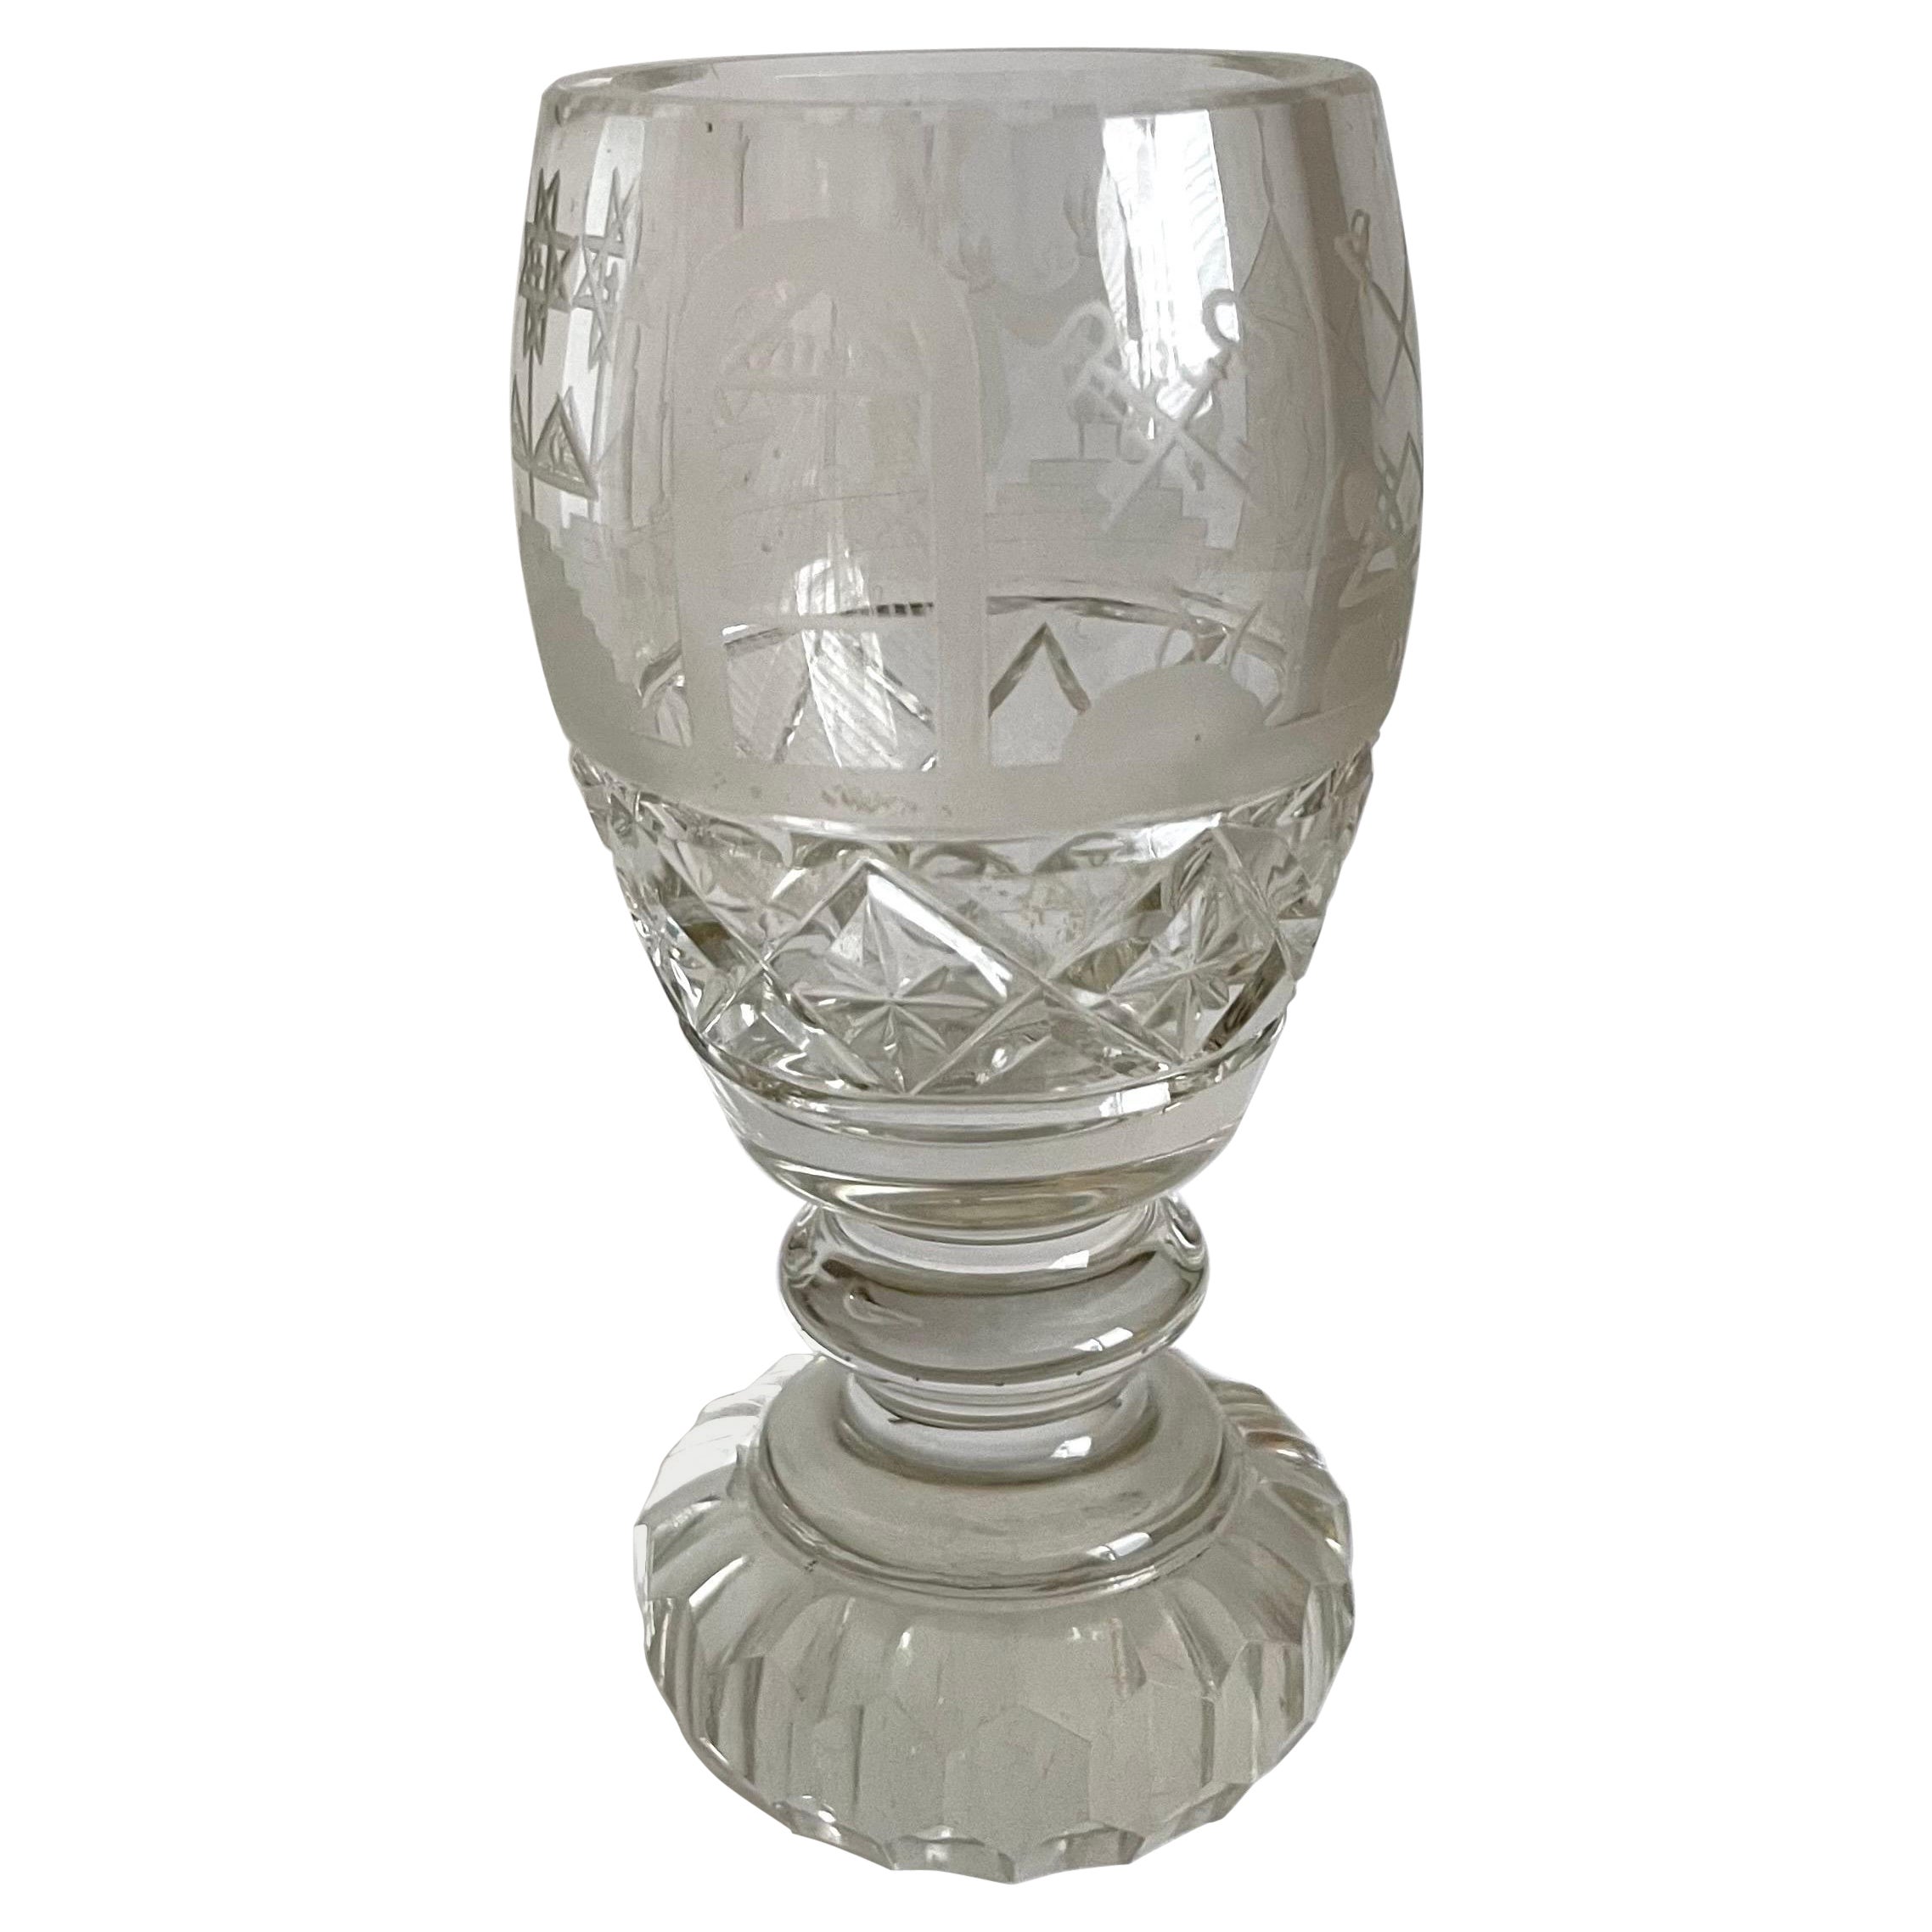 Antique Masonic Cut Crystal Ceremonial Cup